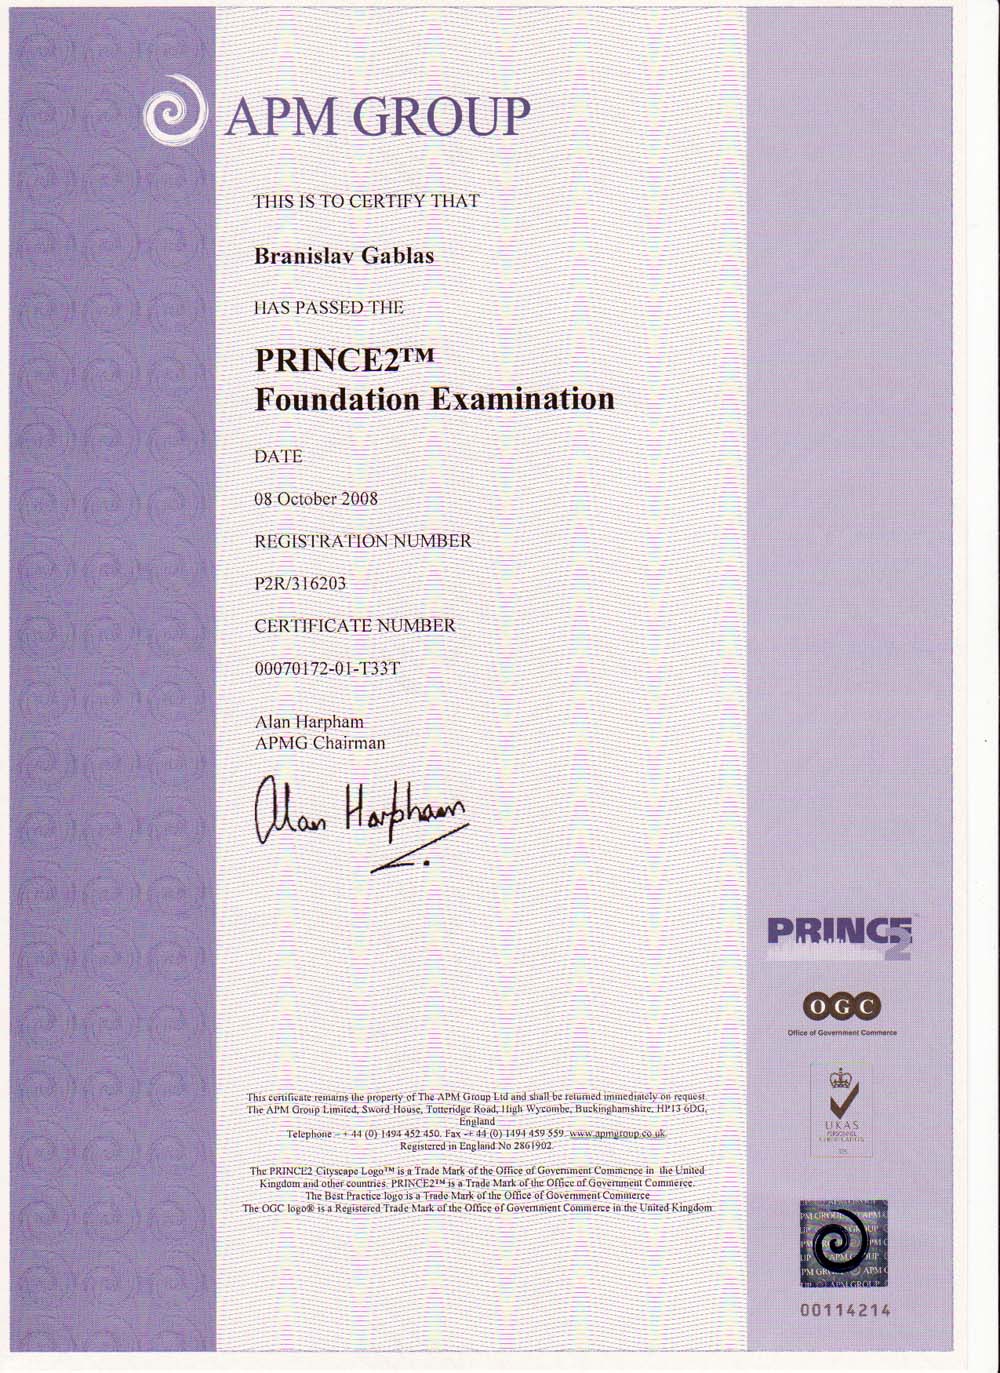 PRINCE2 Foundation certifikát - certficate Branislav Gablas